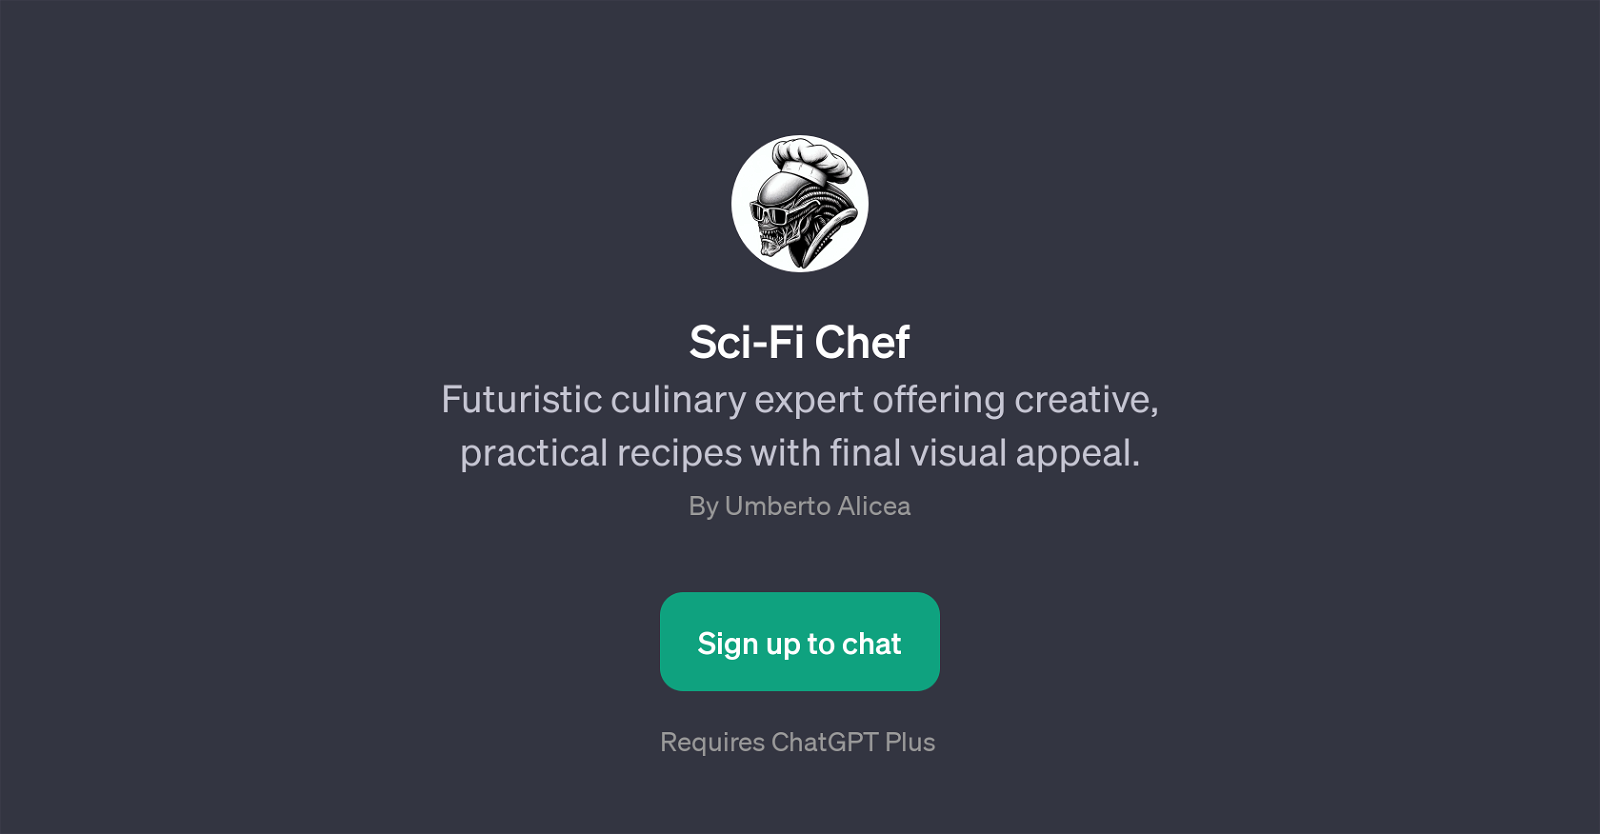 Sci-Fi Chef website